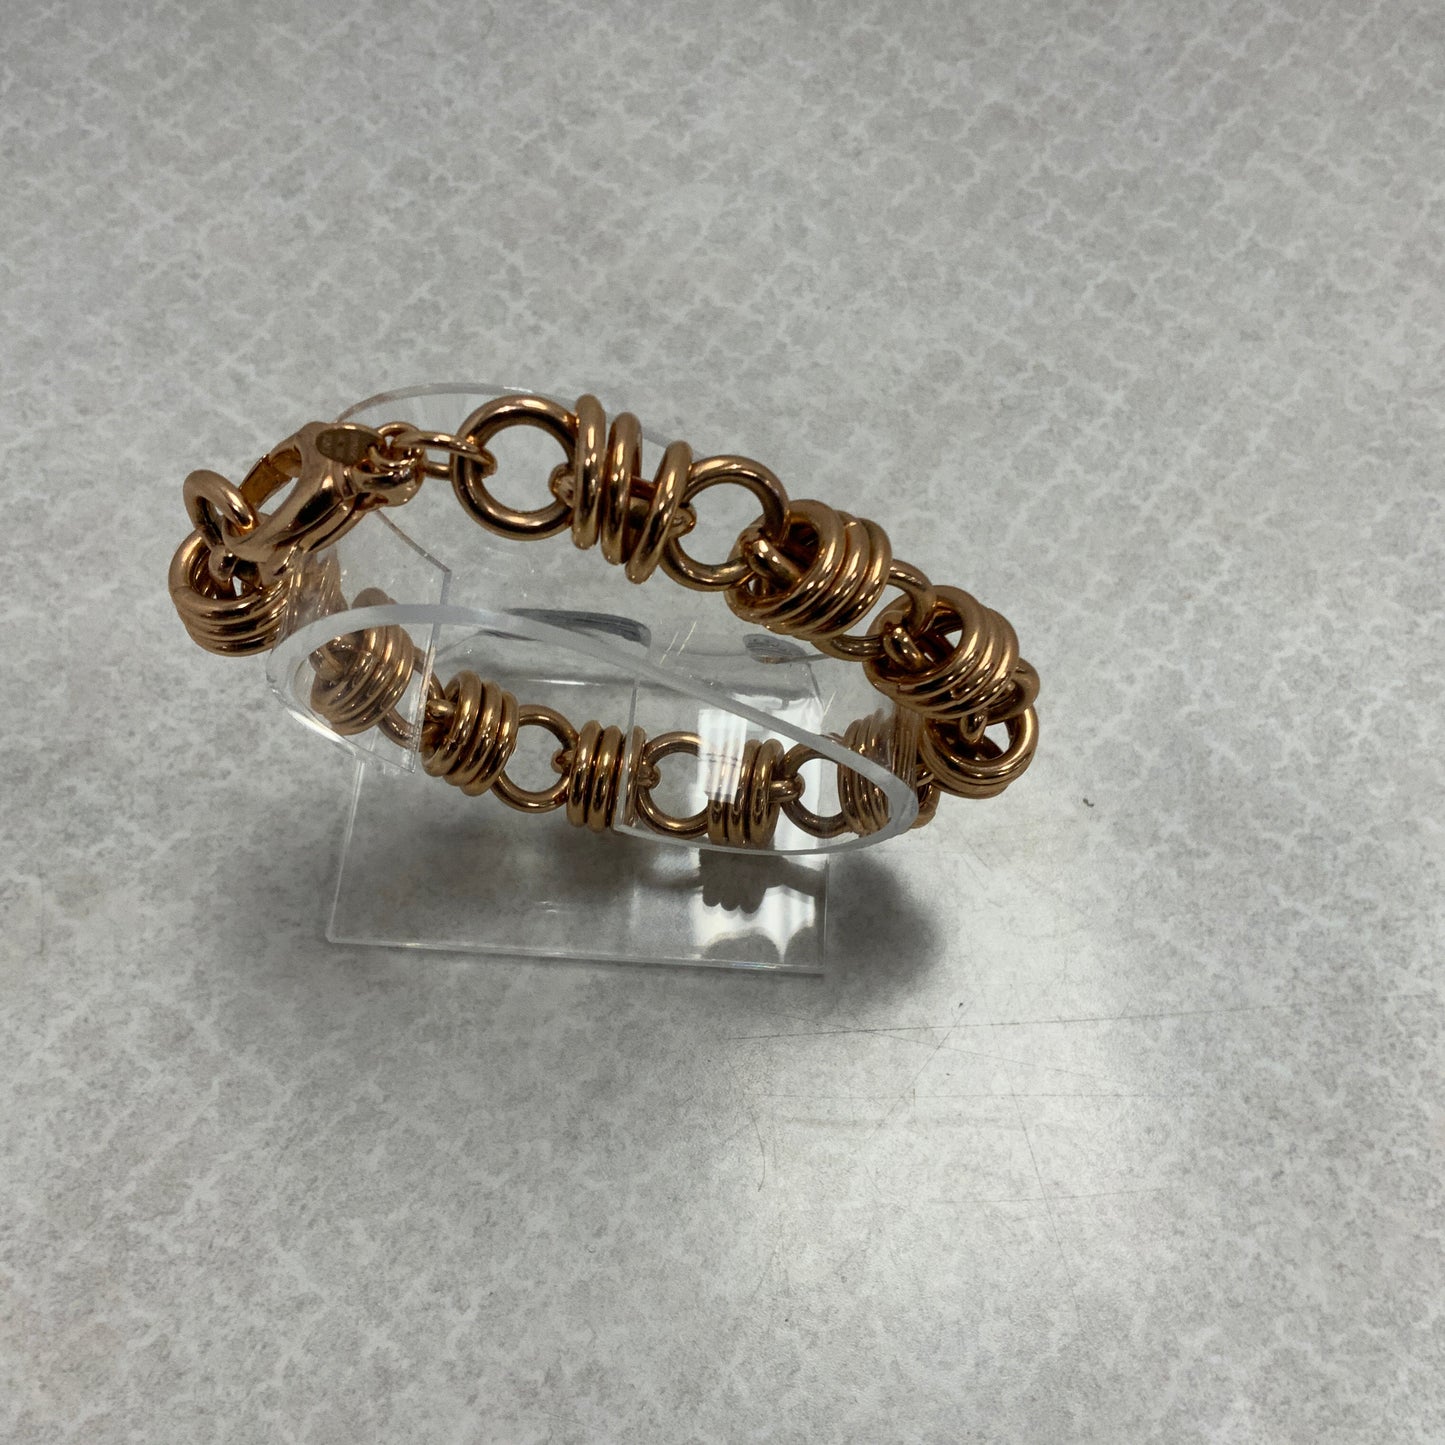 Bracelet Chain By Cmc